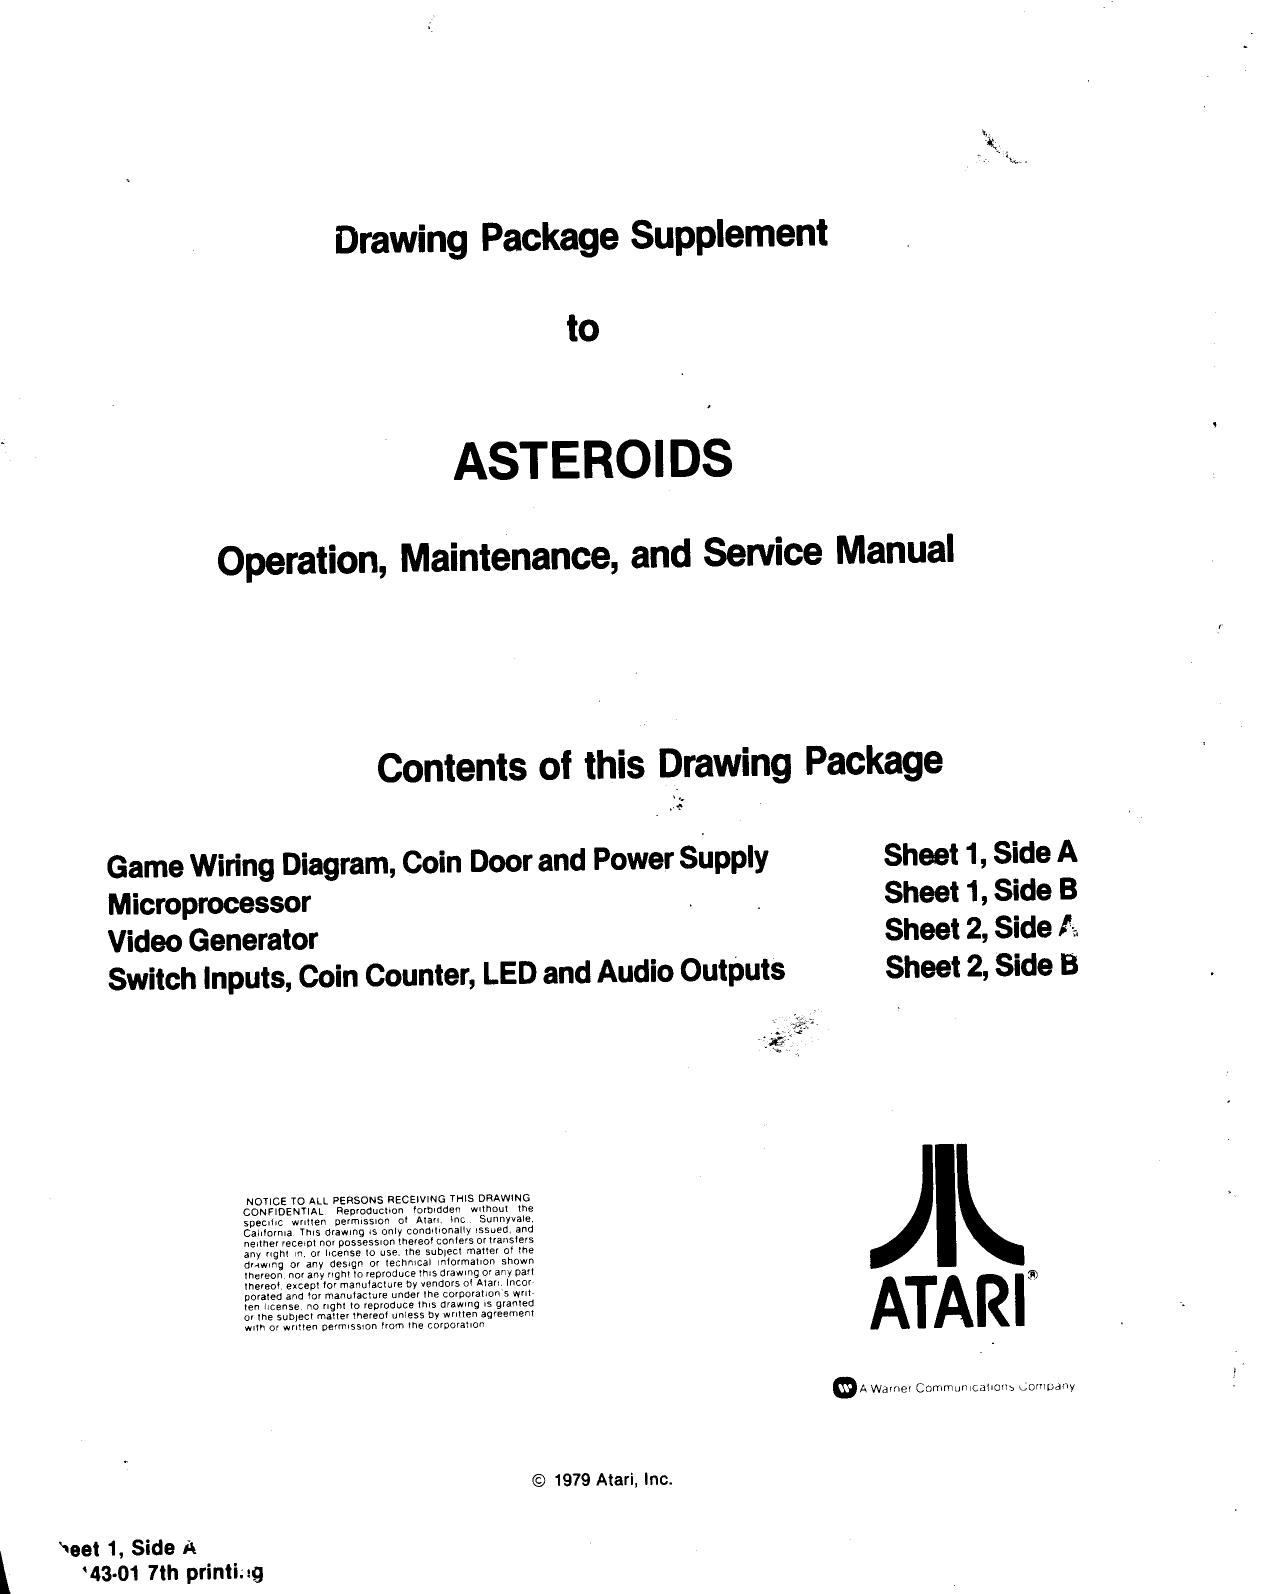 Asteroids Caberat DP-143 7th Printing